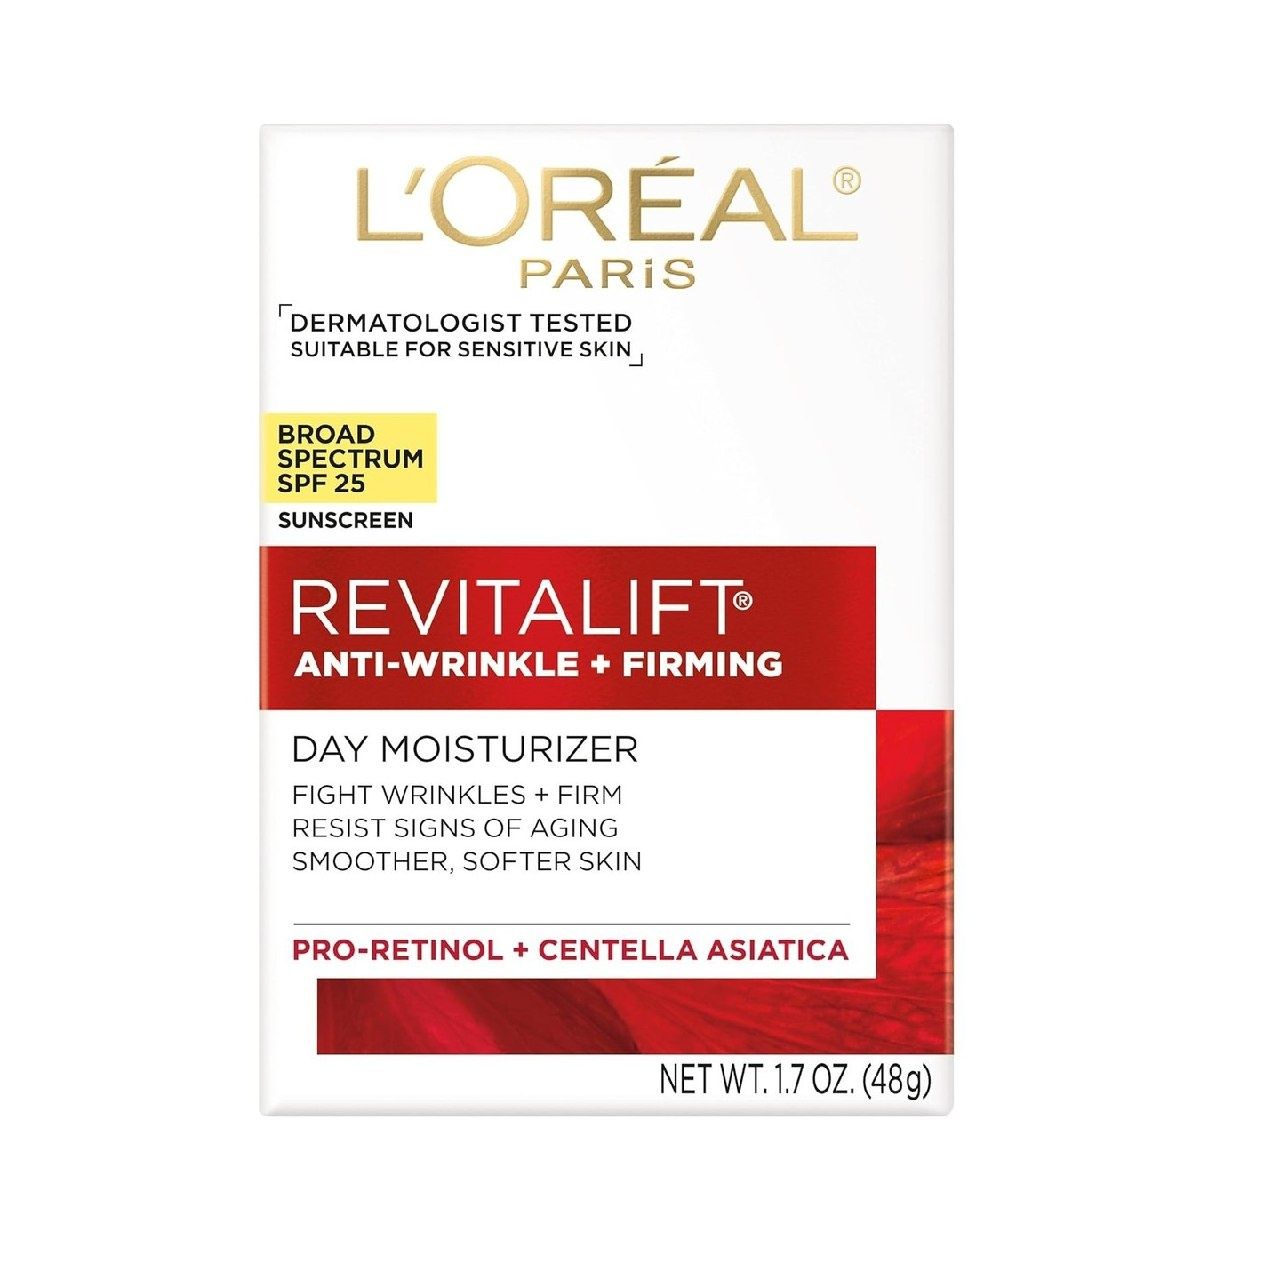 L'Oréal Paris Revitalift Увлажняющее средство для лица против морщин и